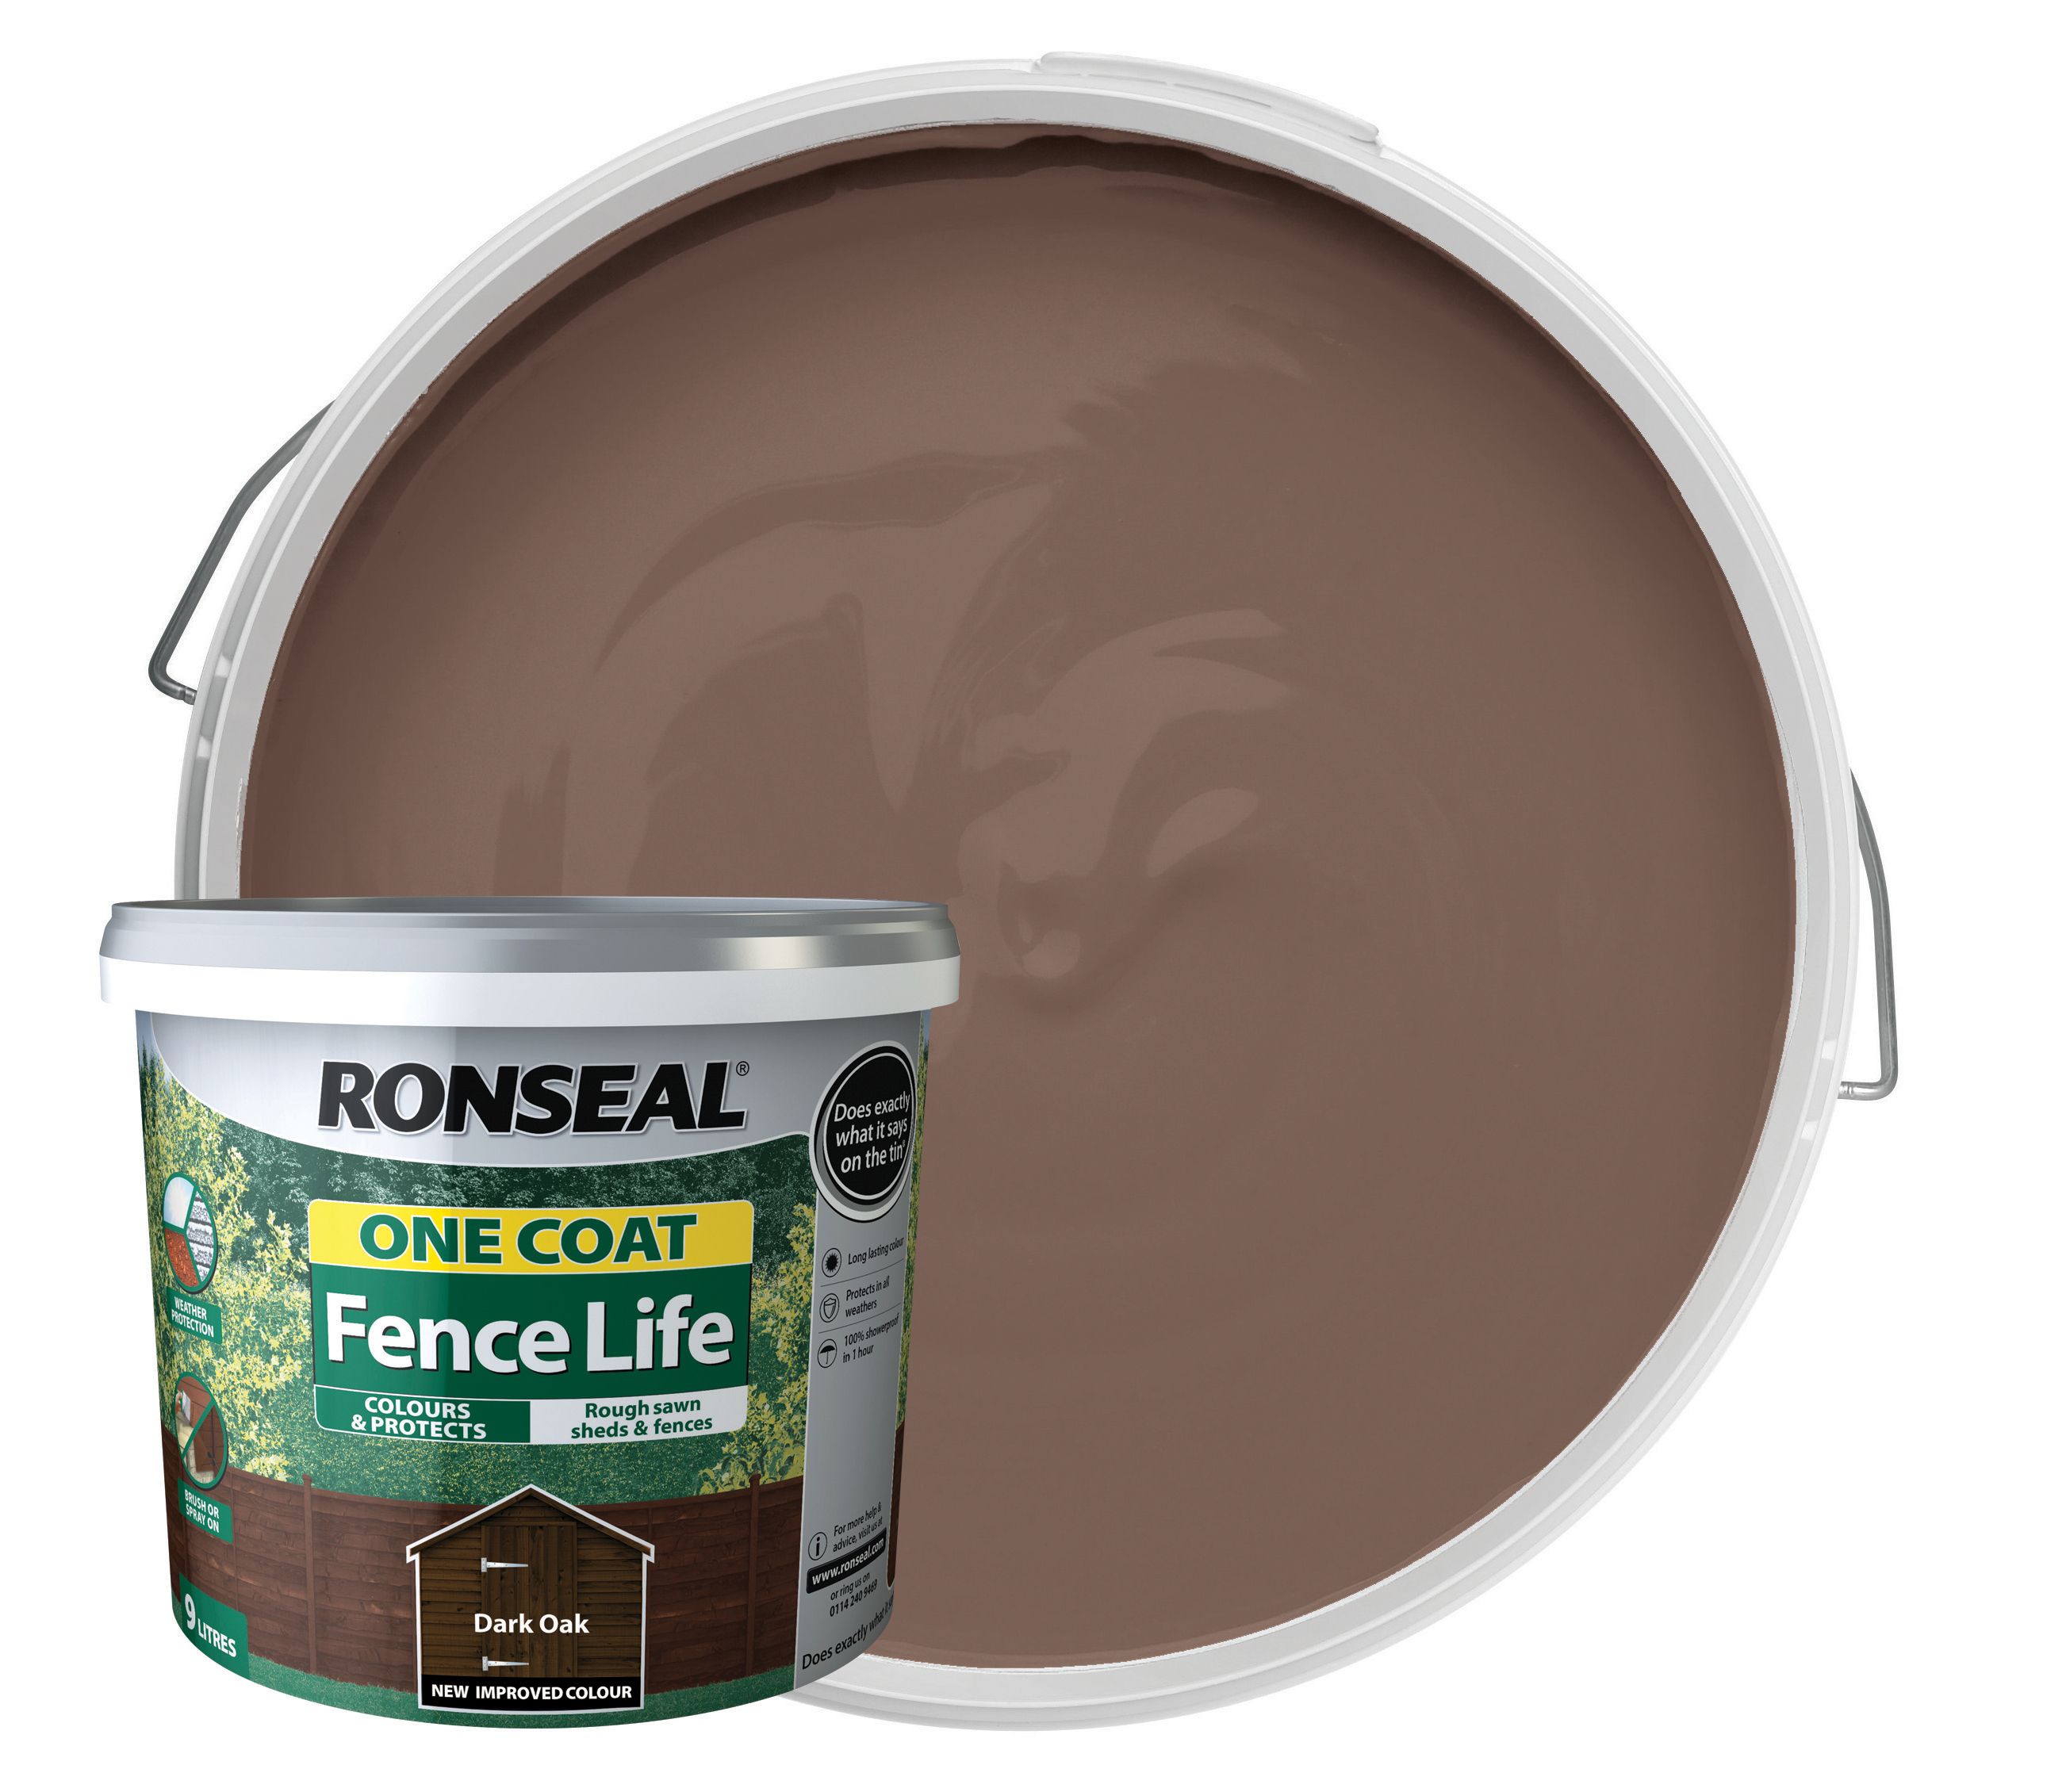 Ronseal One Coat Fence Life Matt Shed & Fence Treatment - Dark Oak 9L